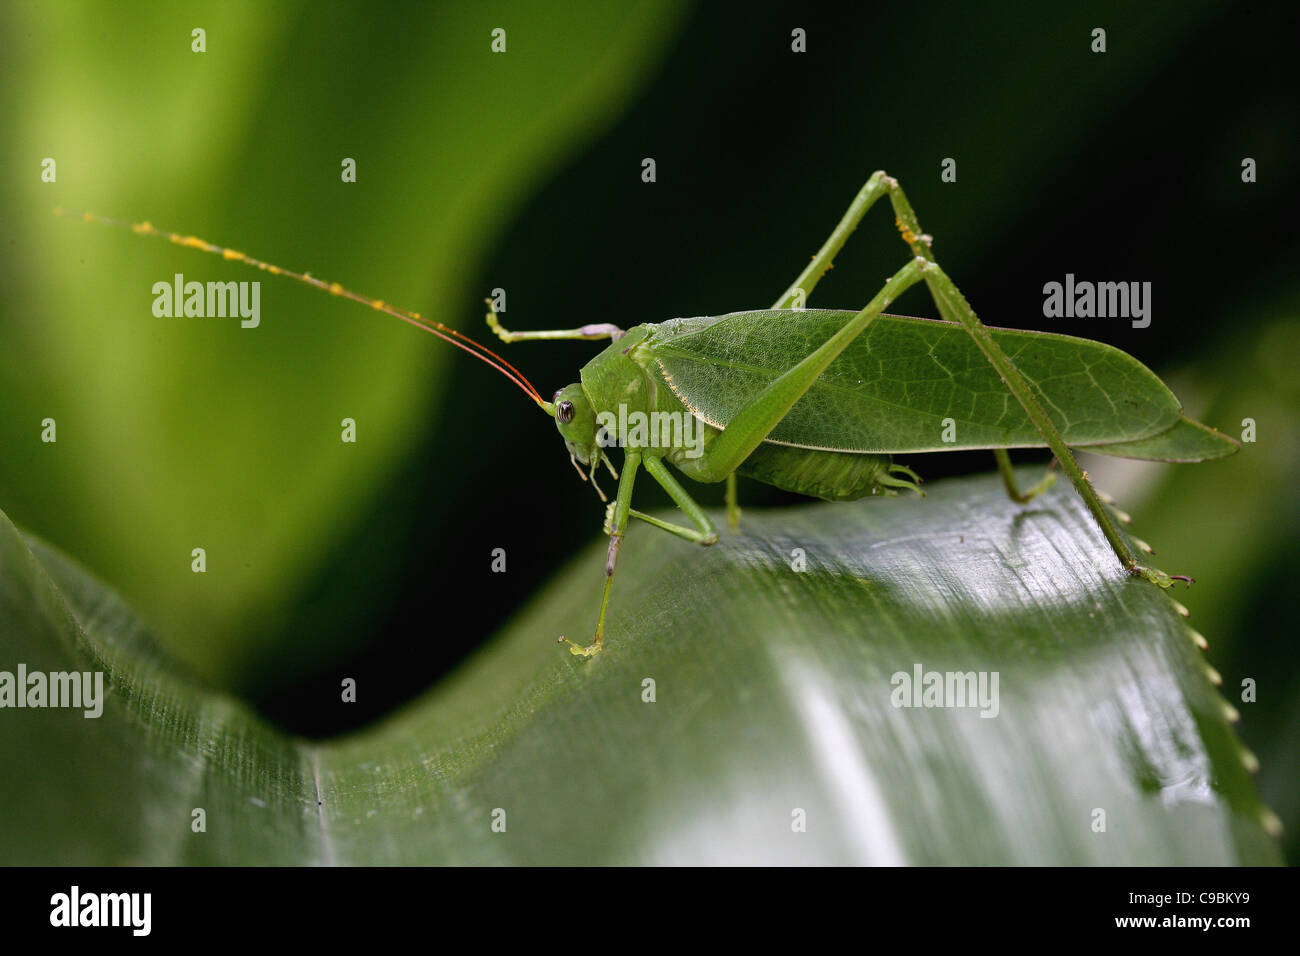 Afrika, Guinea-Bissau, Grasshopper auf Blatt, Nahaufnahme Stockfoto